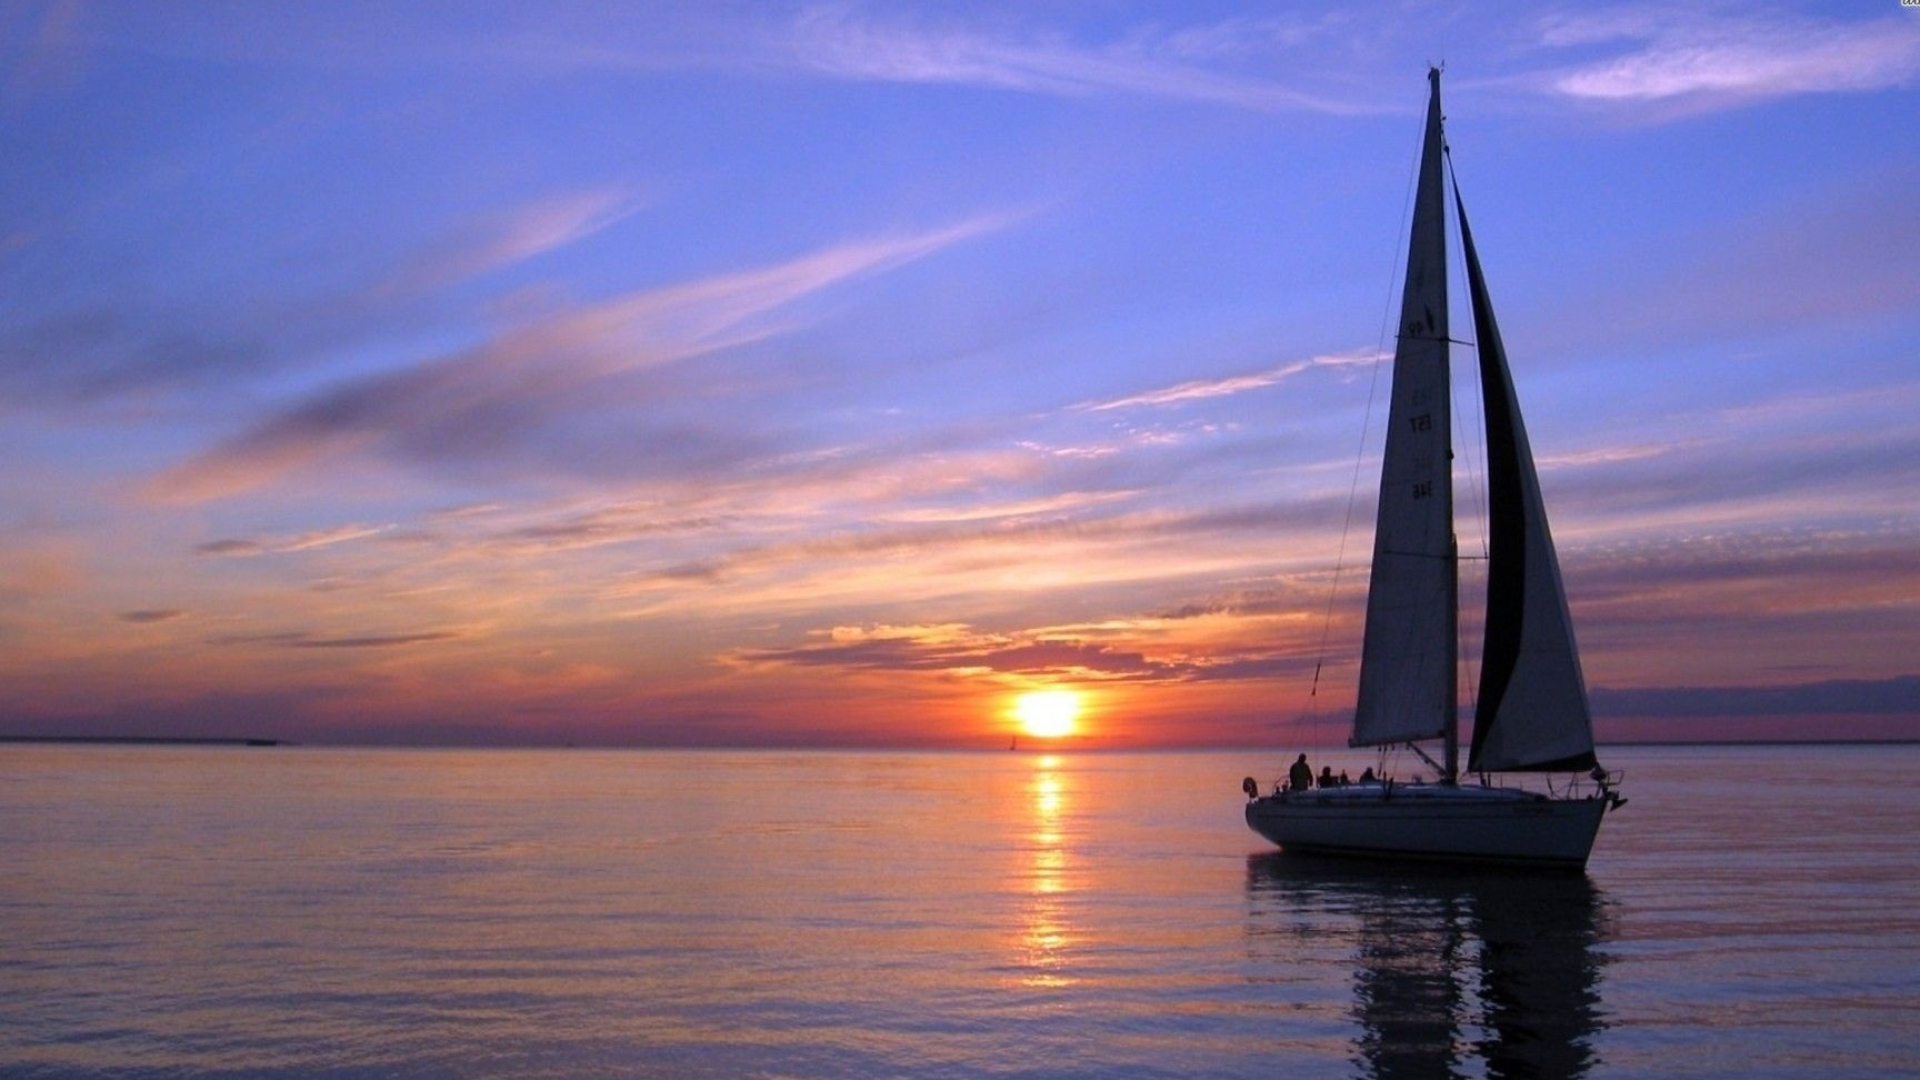 Sailboat sunset, Stunning backgrounds, Warm hues, Tranquility at dusk, 1920x1080 Full HD Desktop